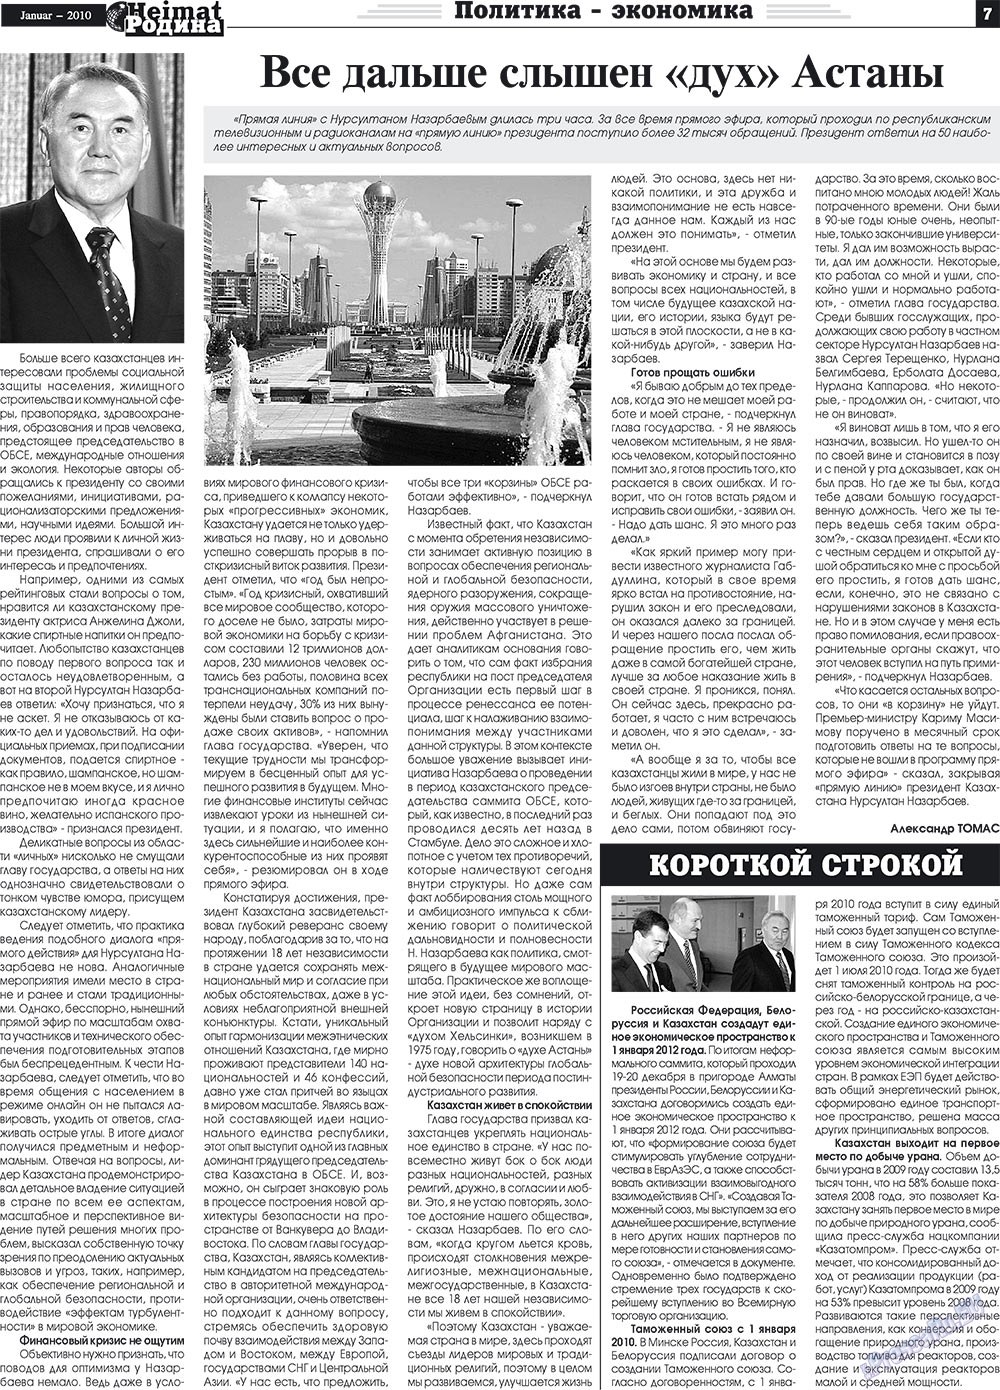 Heimat-Родина, газета. 2010 №1 стр.7